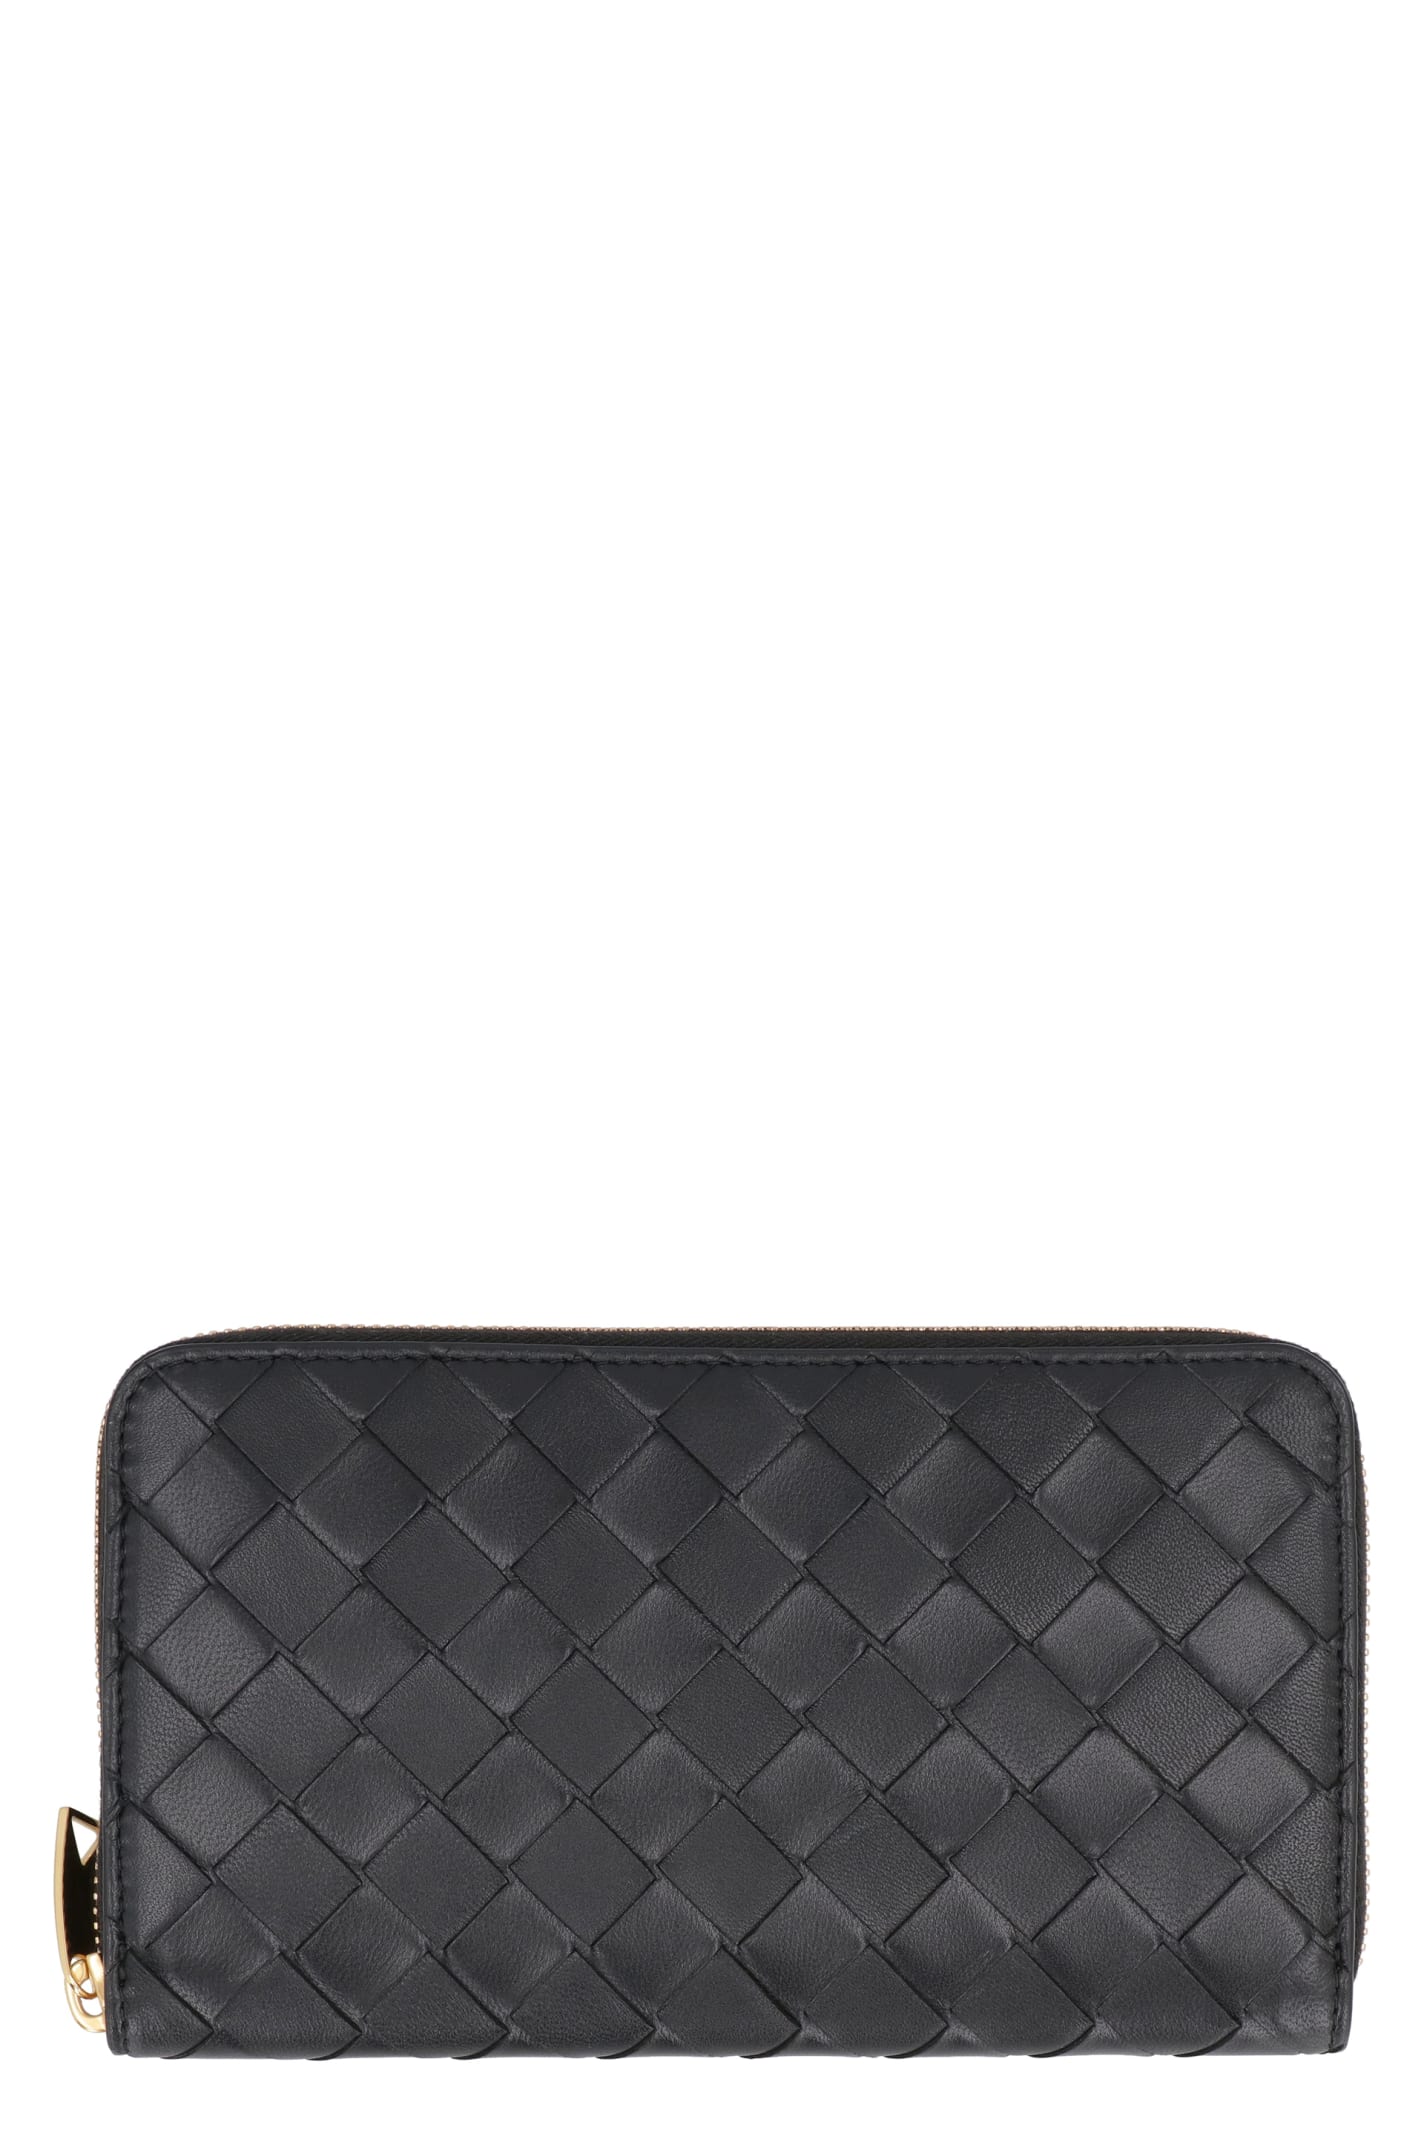 Bottega Veneta Leather Zip-around Wallet